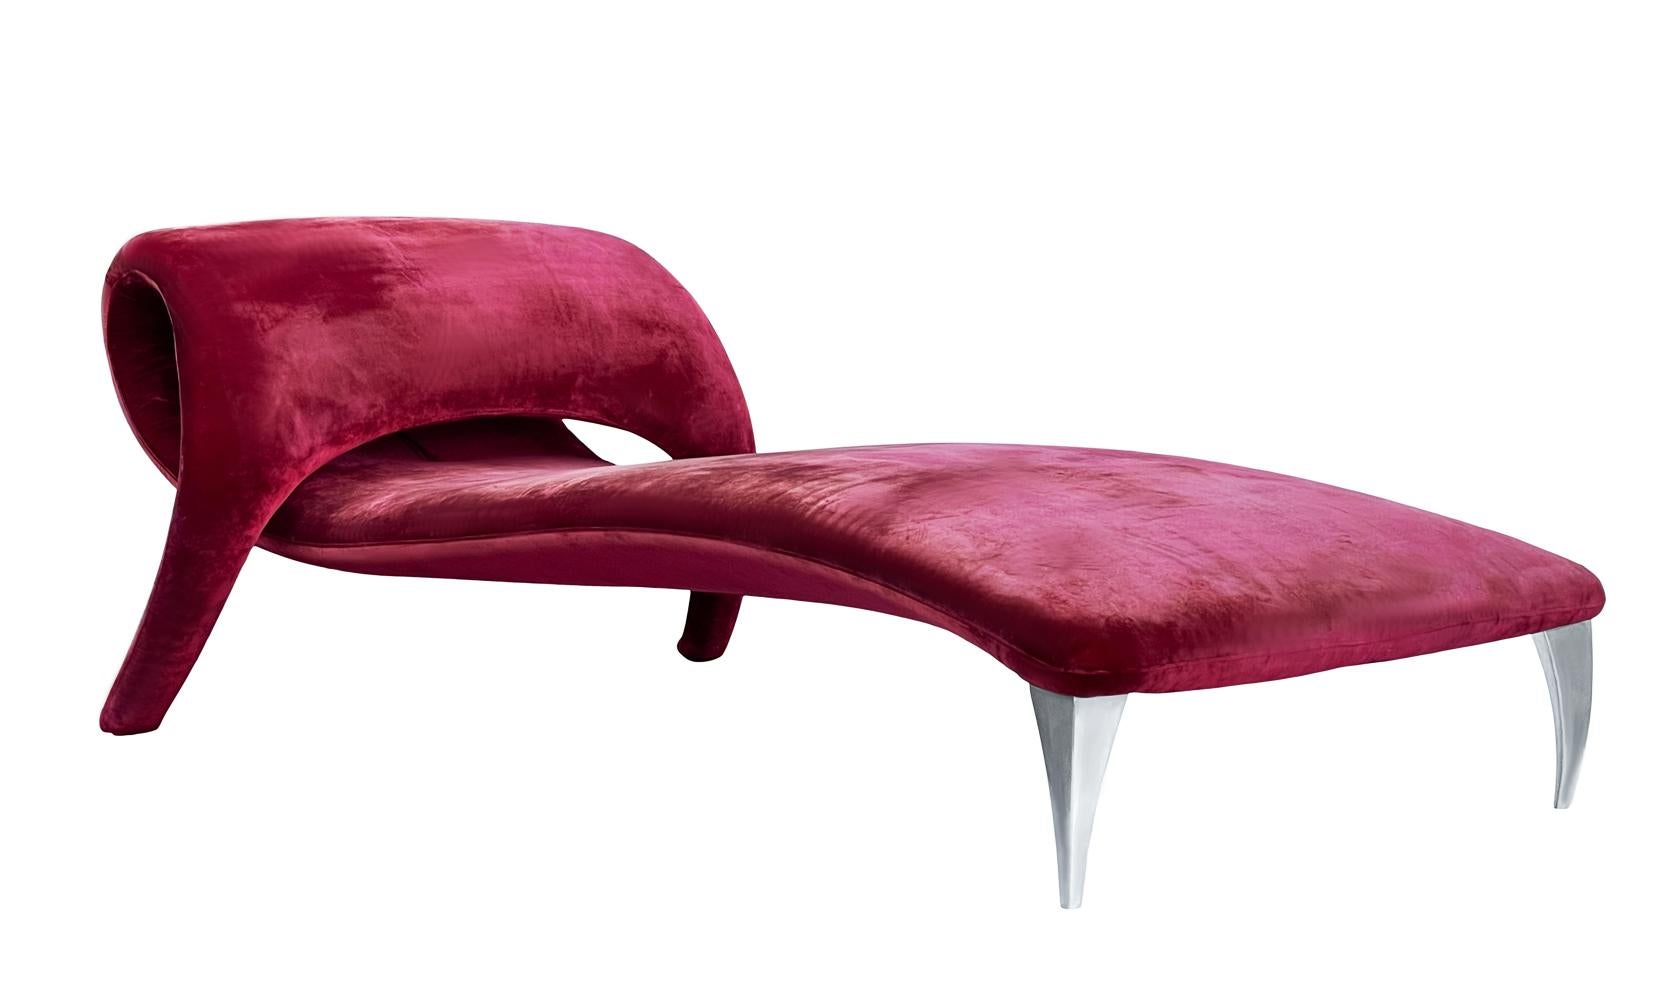 Stainless Steel Mid-Century Italian Post Modern Sculptural Chaise Lounge in Red Velvet For Sale